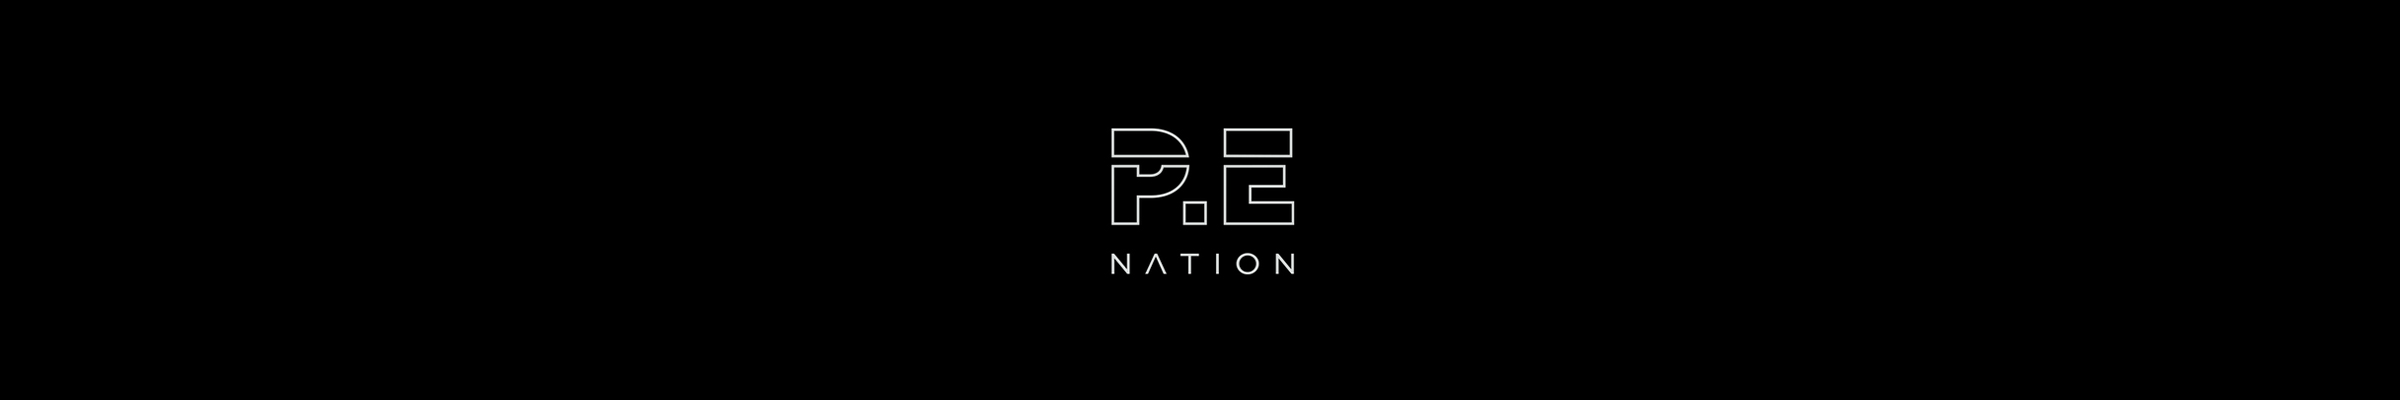 pe-nation-banner